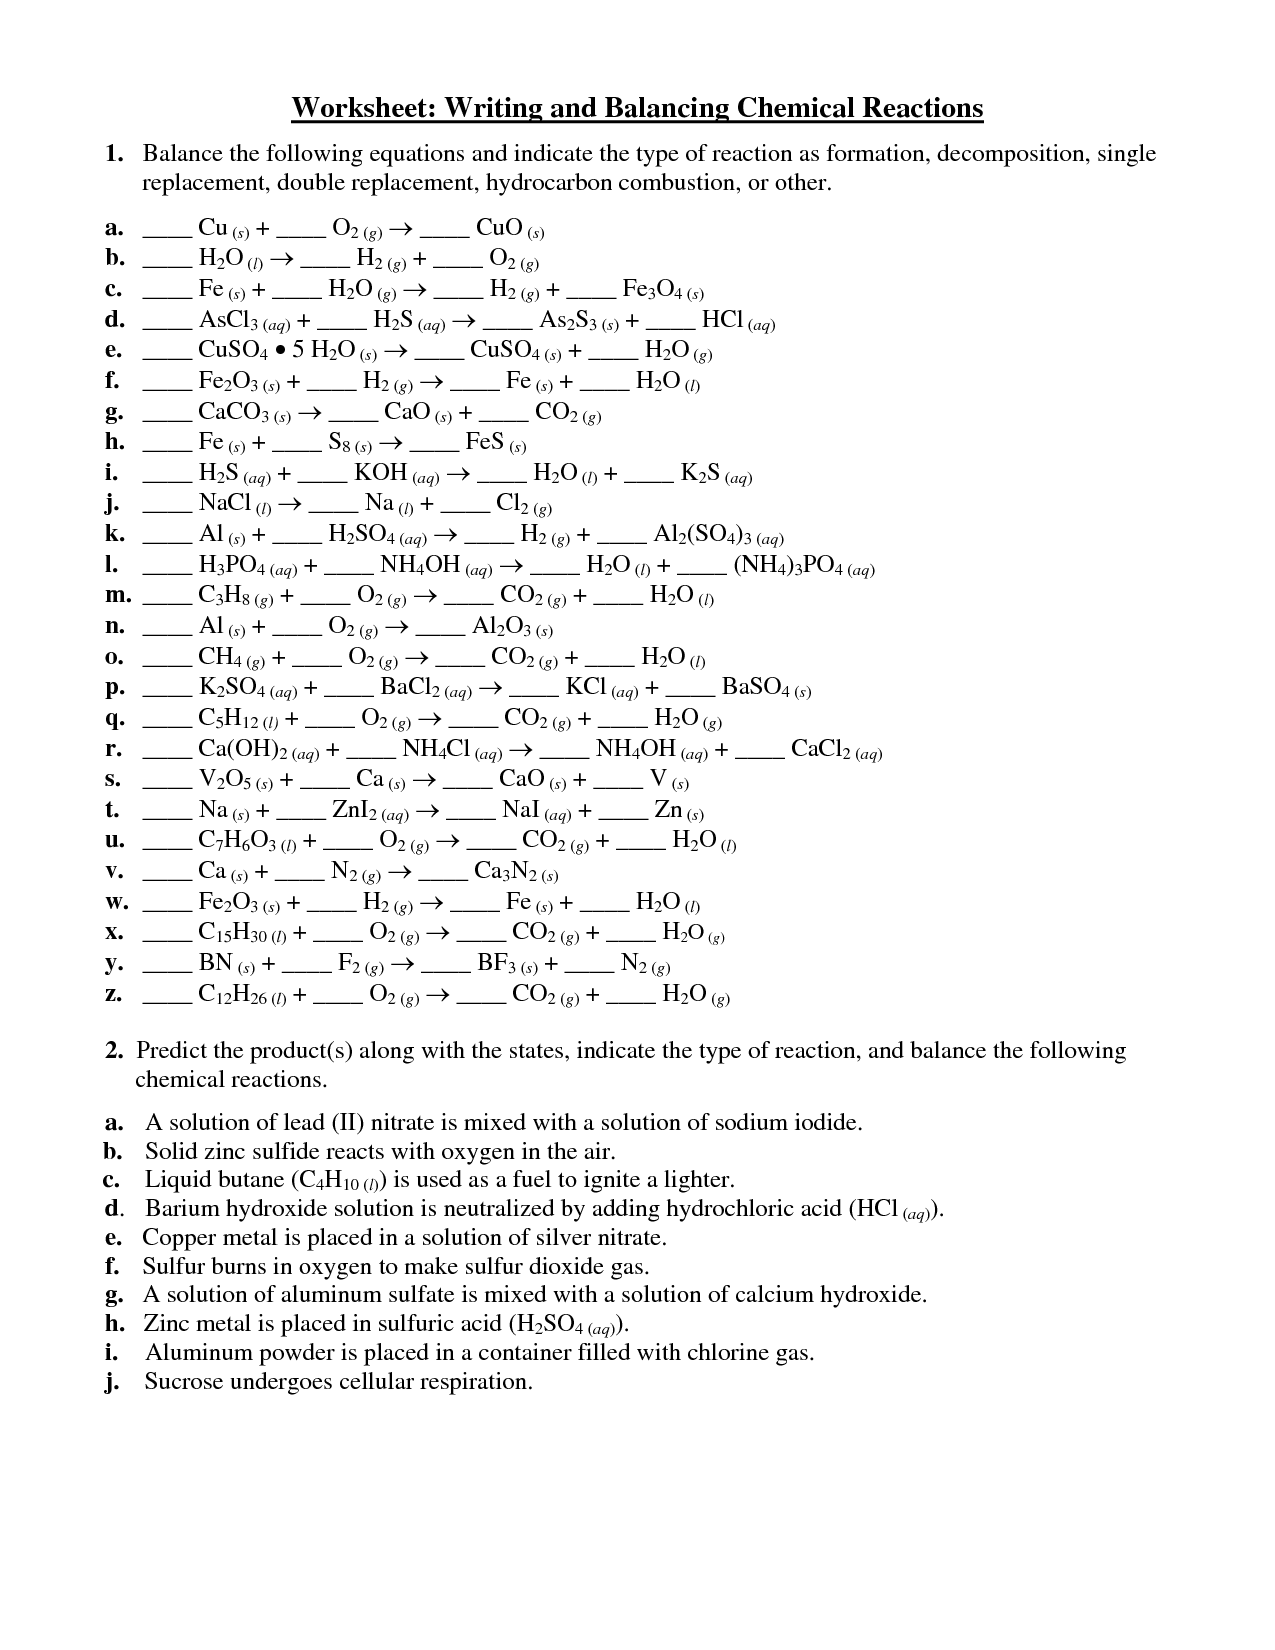 Balancing Chemical Equations Worksheet Image